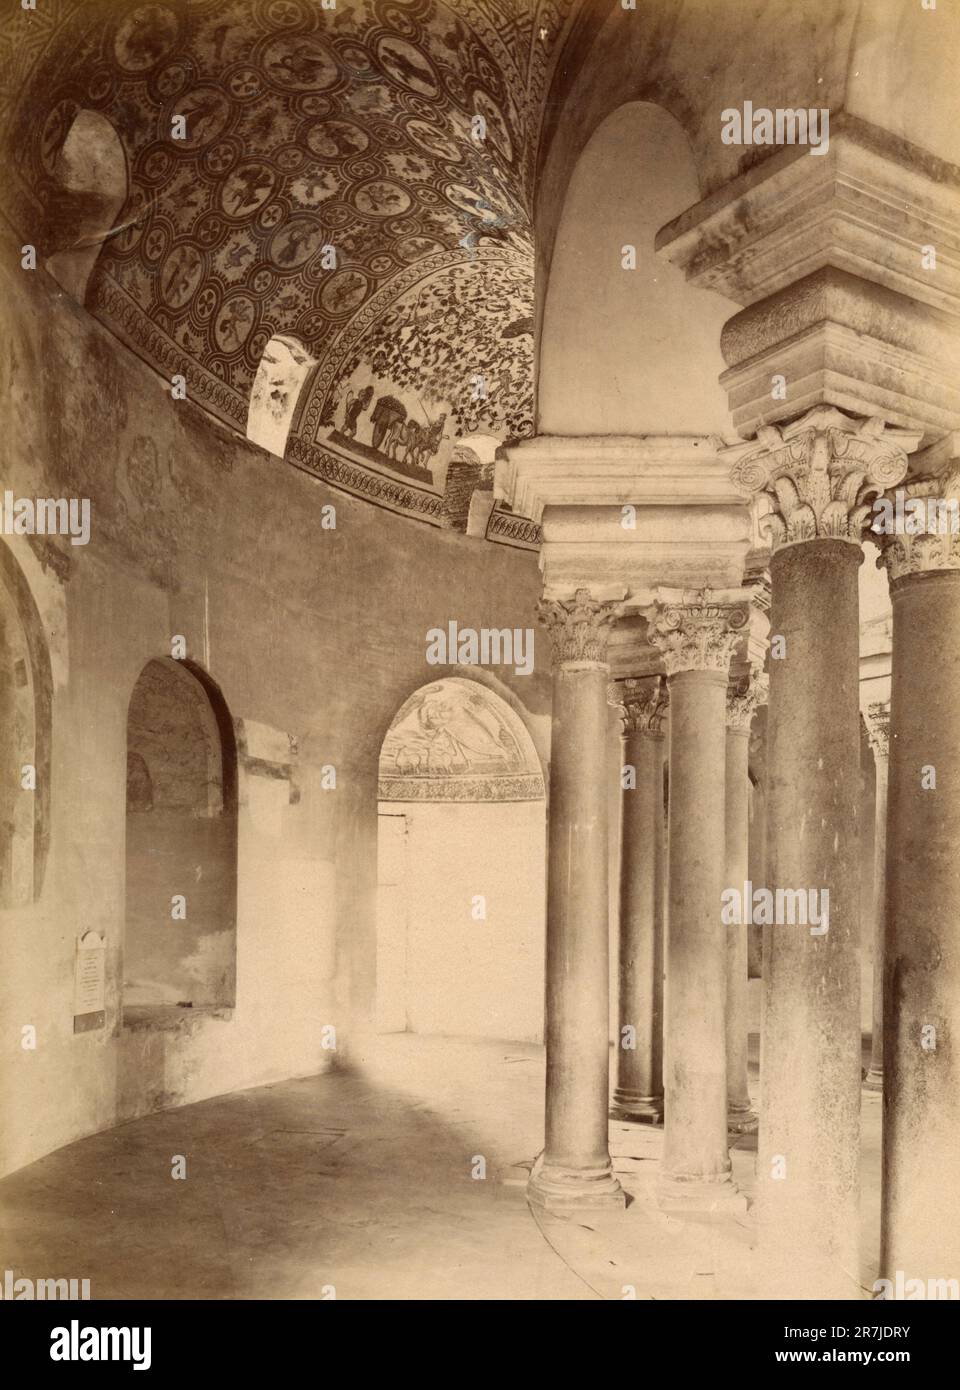 Inside view of the Mausoleo of Santa Costanza Corinthian columns, Rome, Italy 1980s Stock Photo